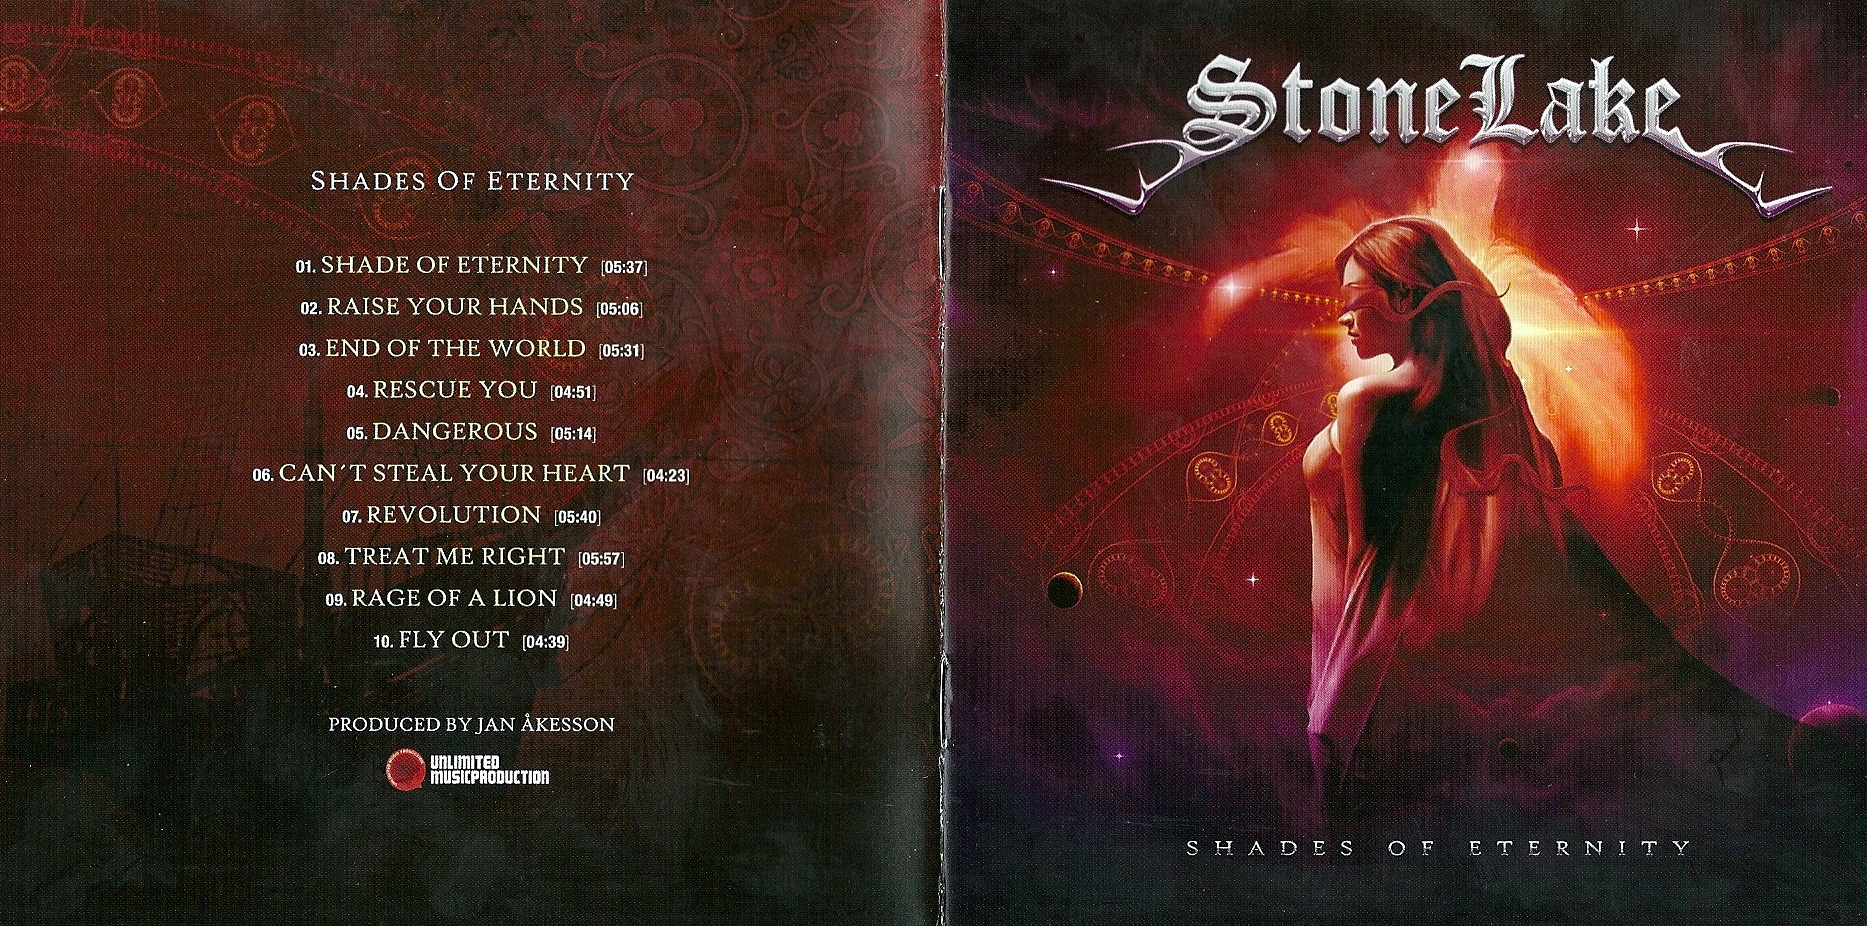 2009 StoneLake - Shades Of Eternity Flac - Booklet 01.jpg